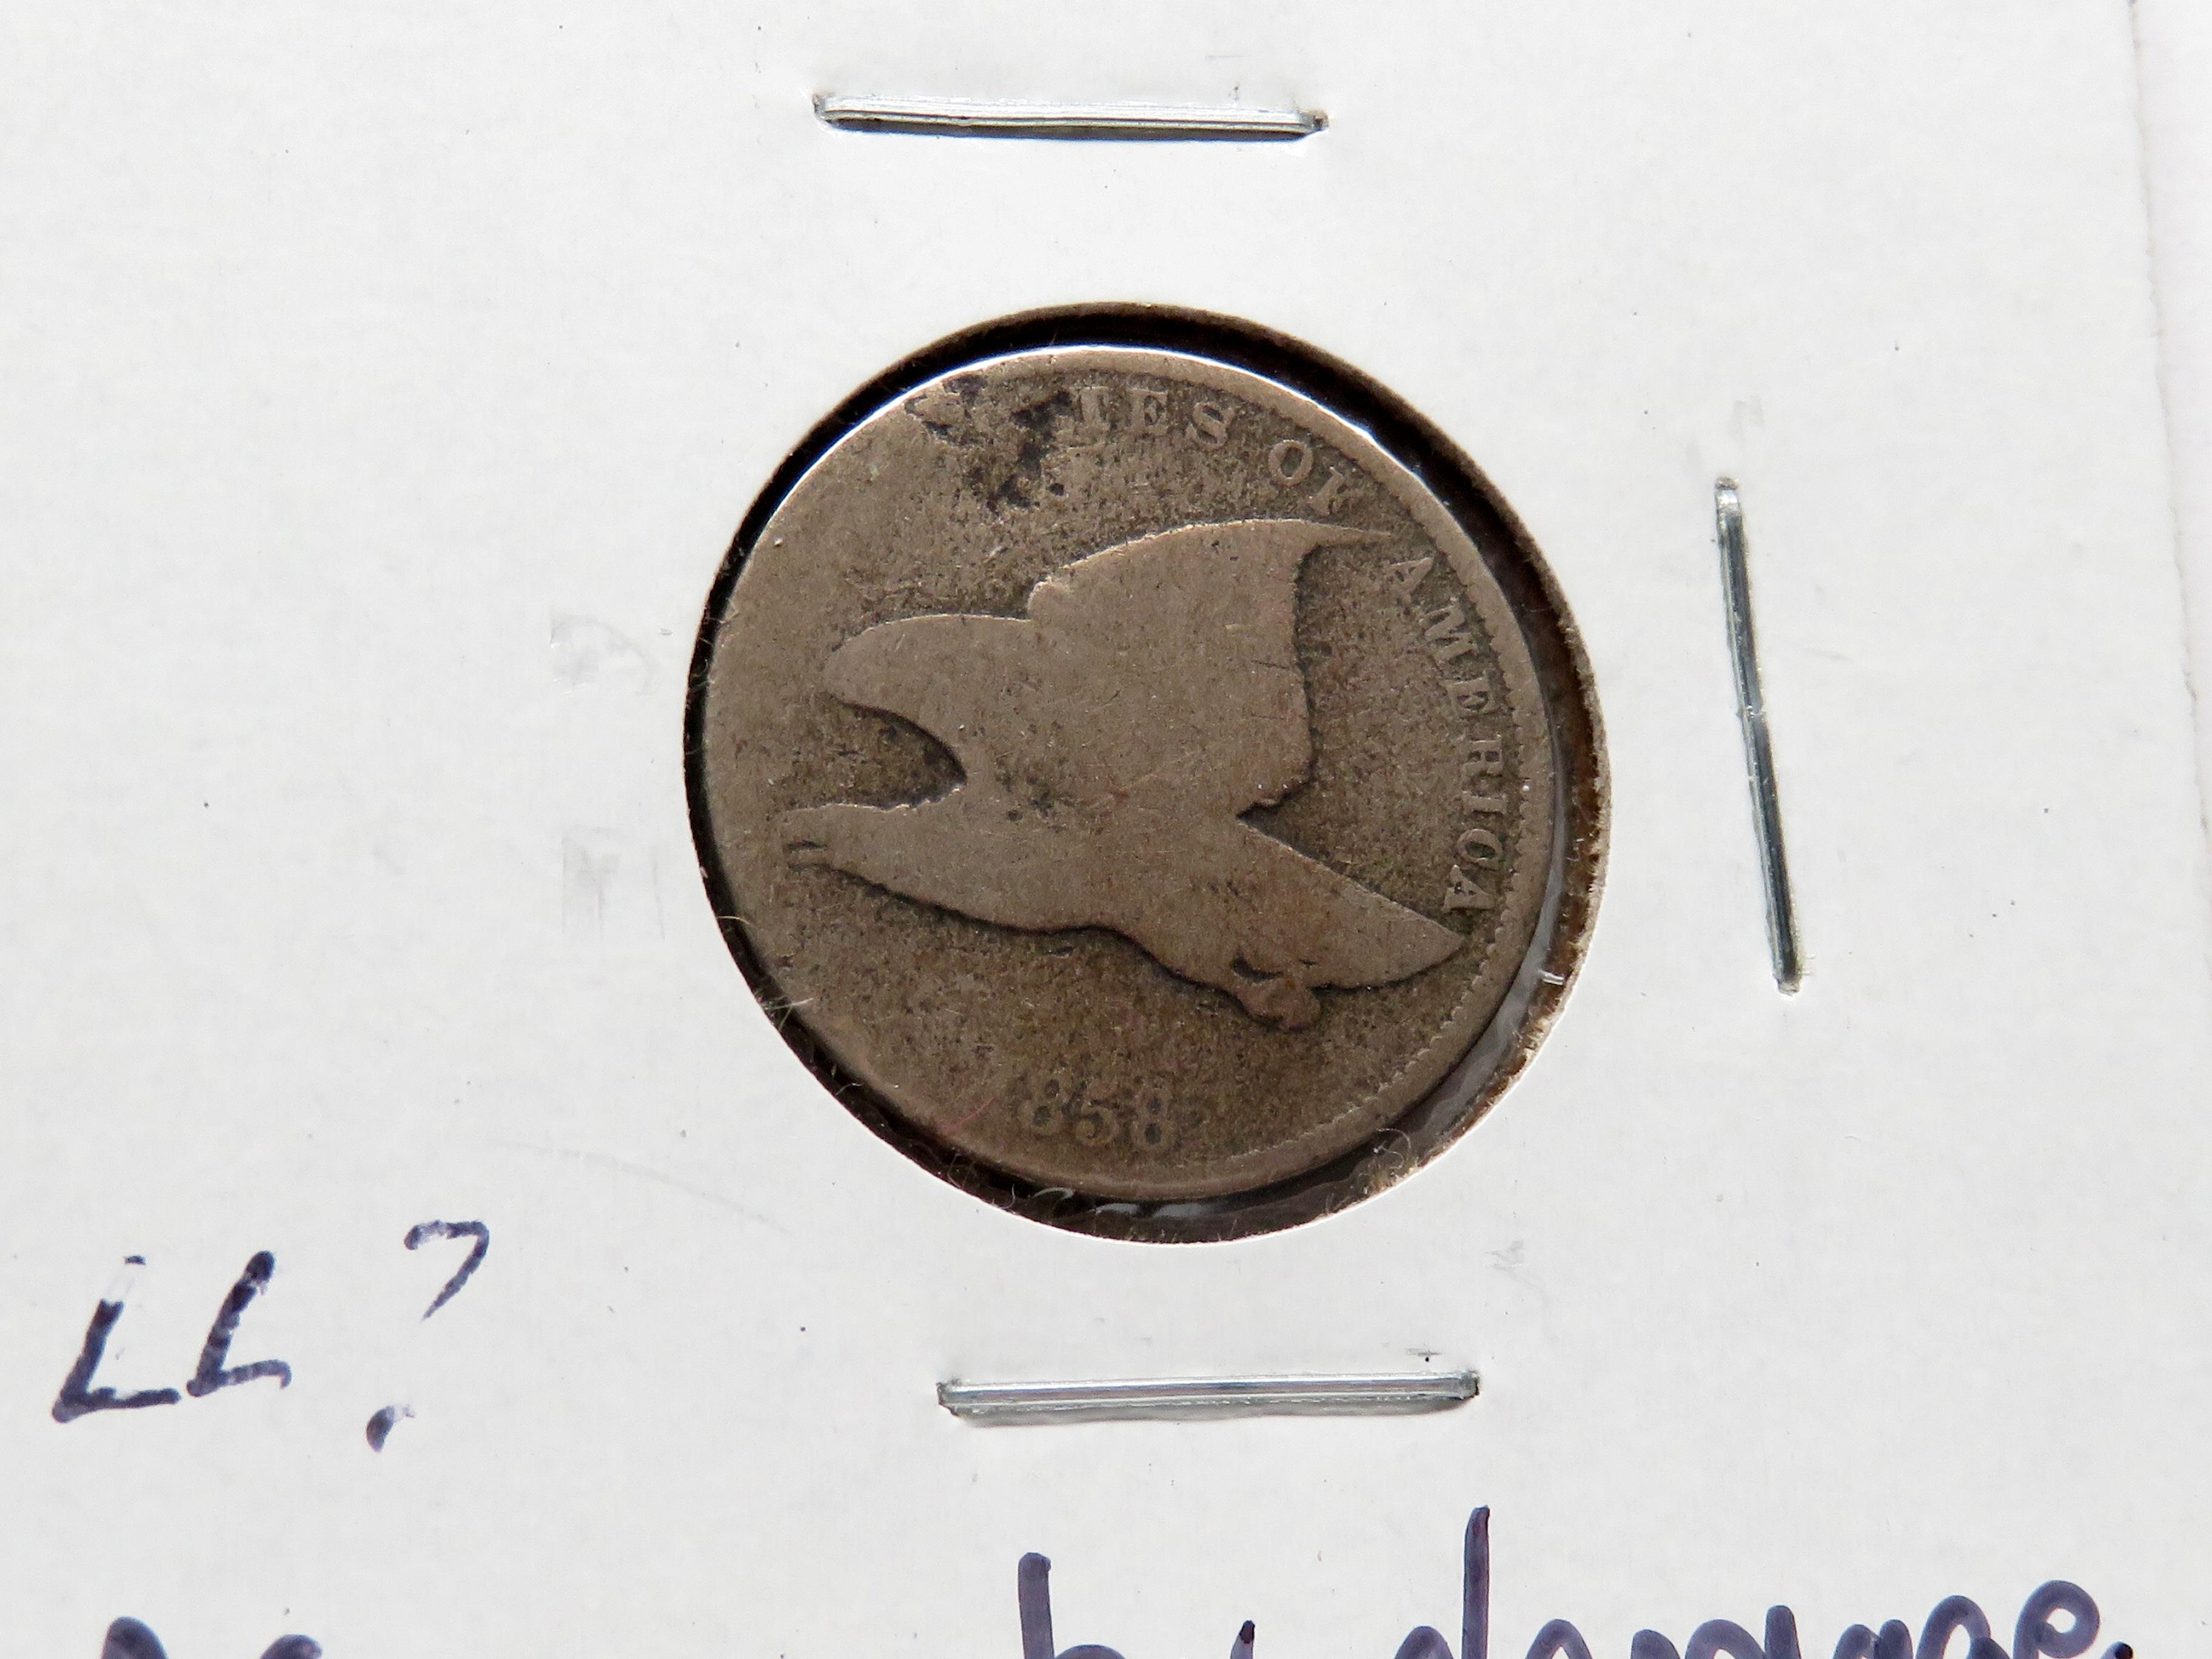 2 Flying Eagle Cents: 1857 F heavy corrosion, 1858 AG obv damage